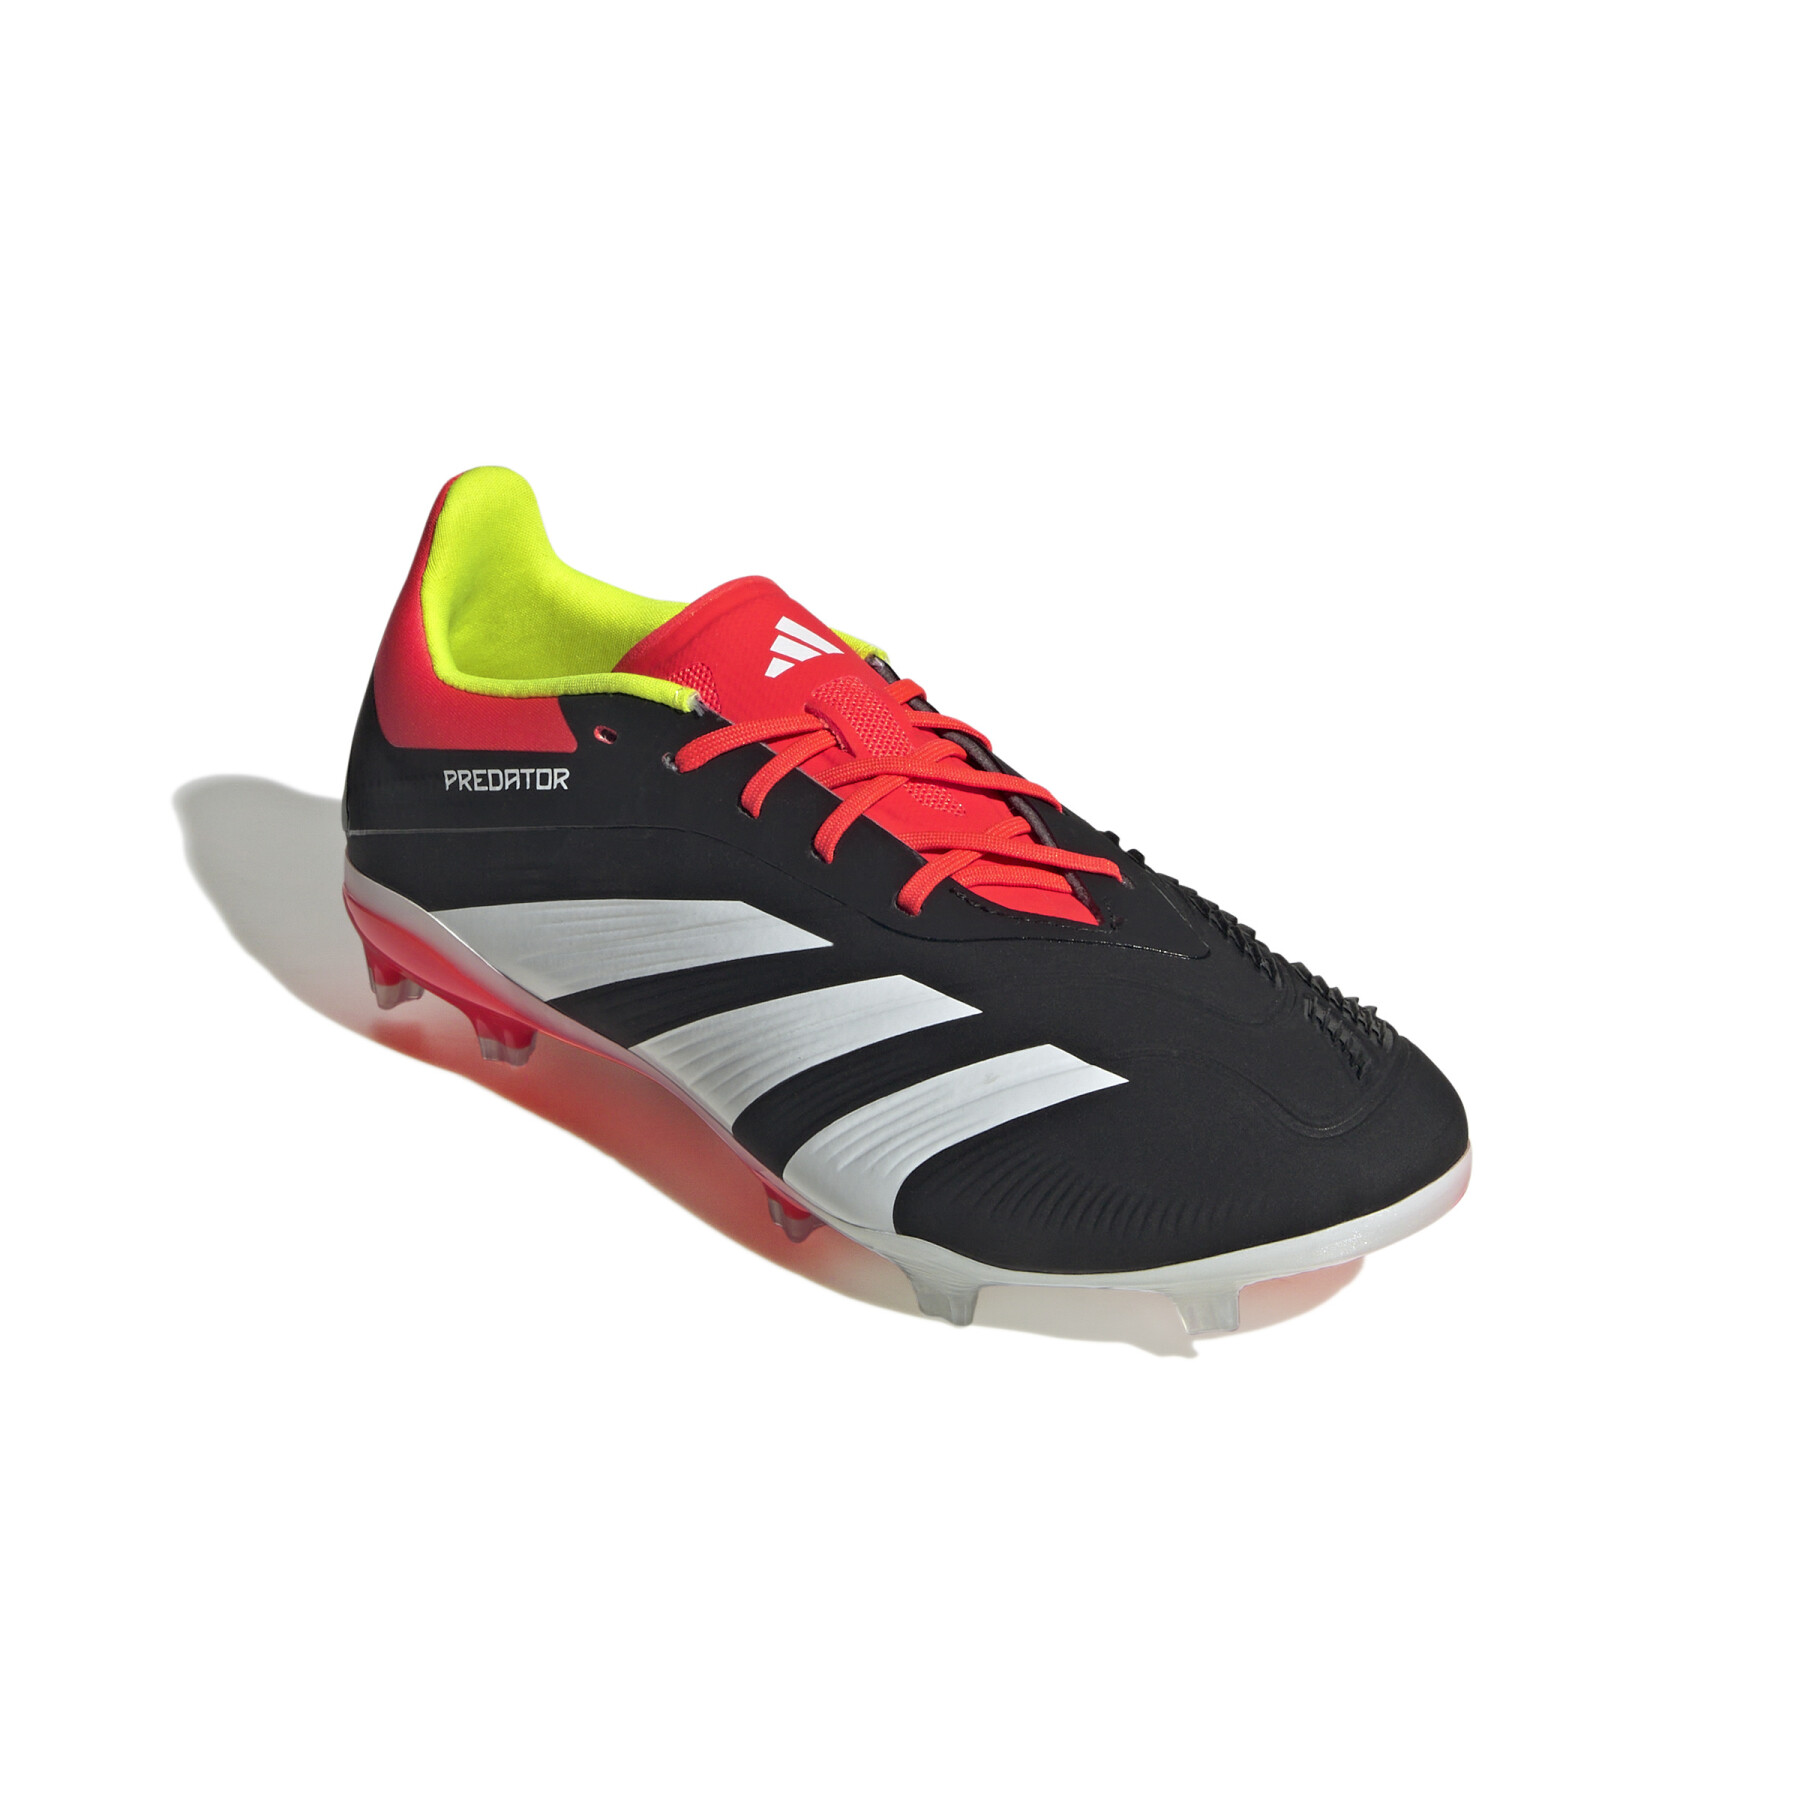 Children's soccer shoes adidas Predator Elite FG